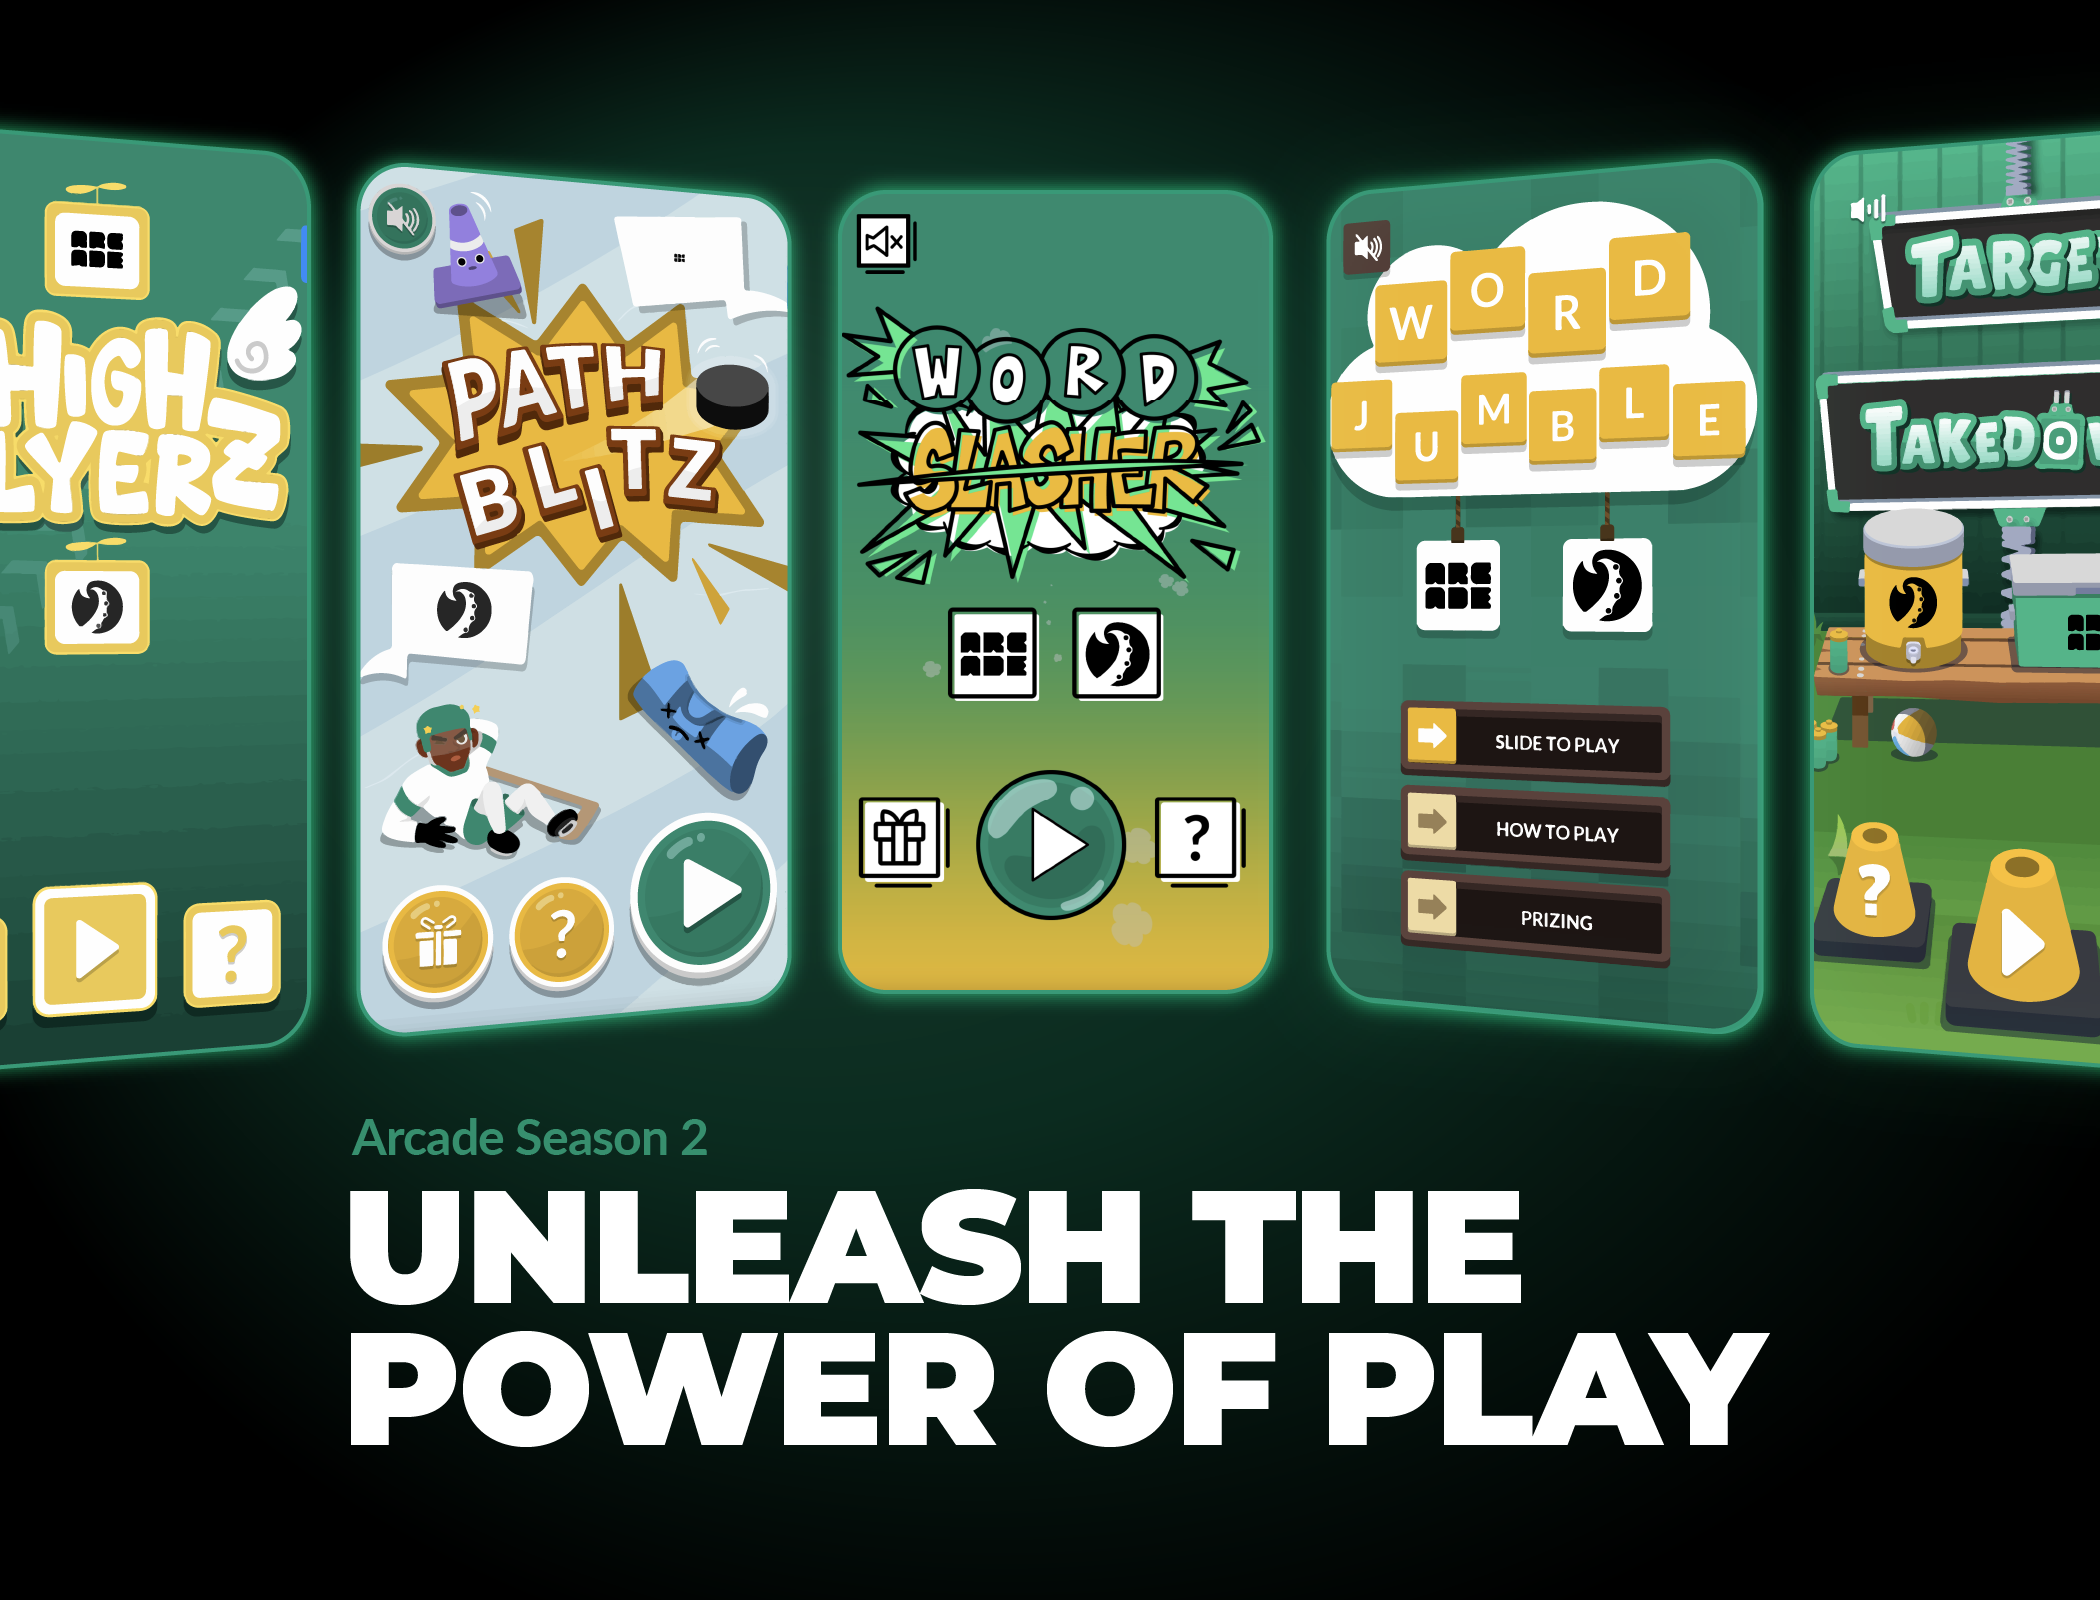 Unleash the Power of Play with Arcade Season 2